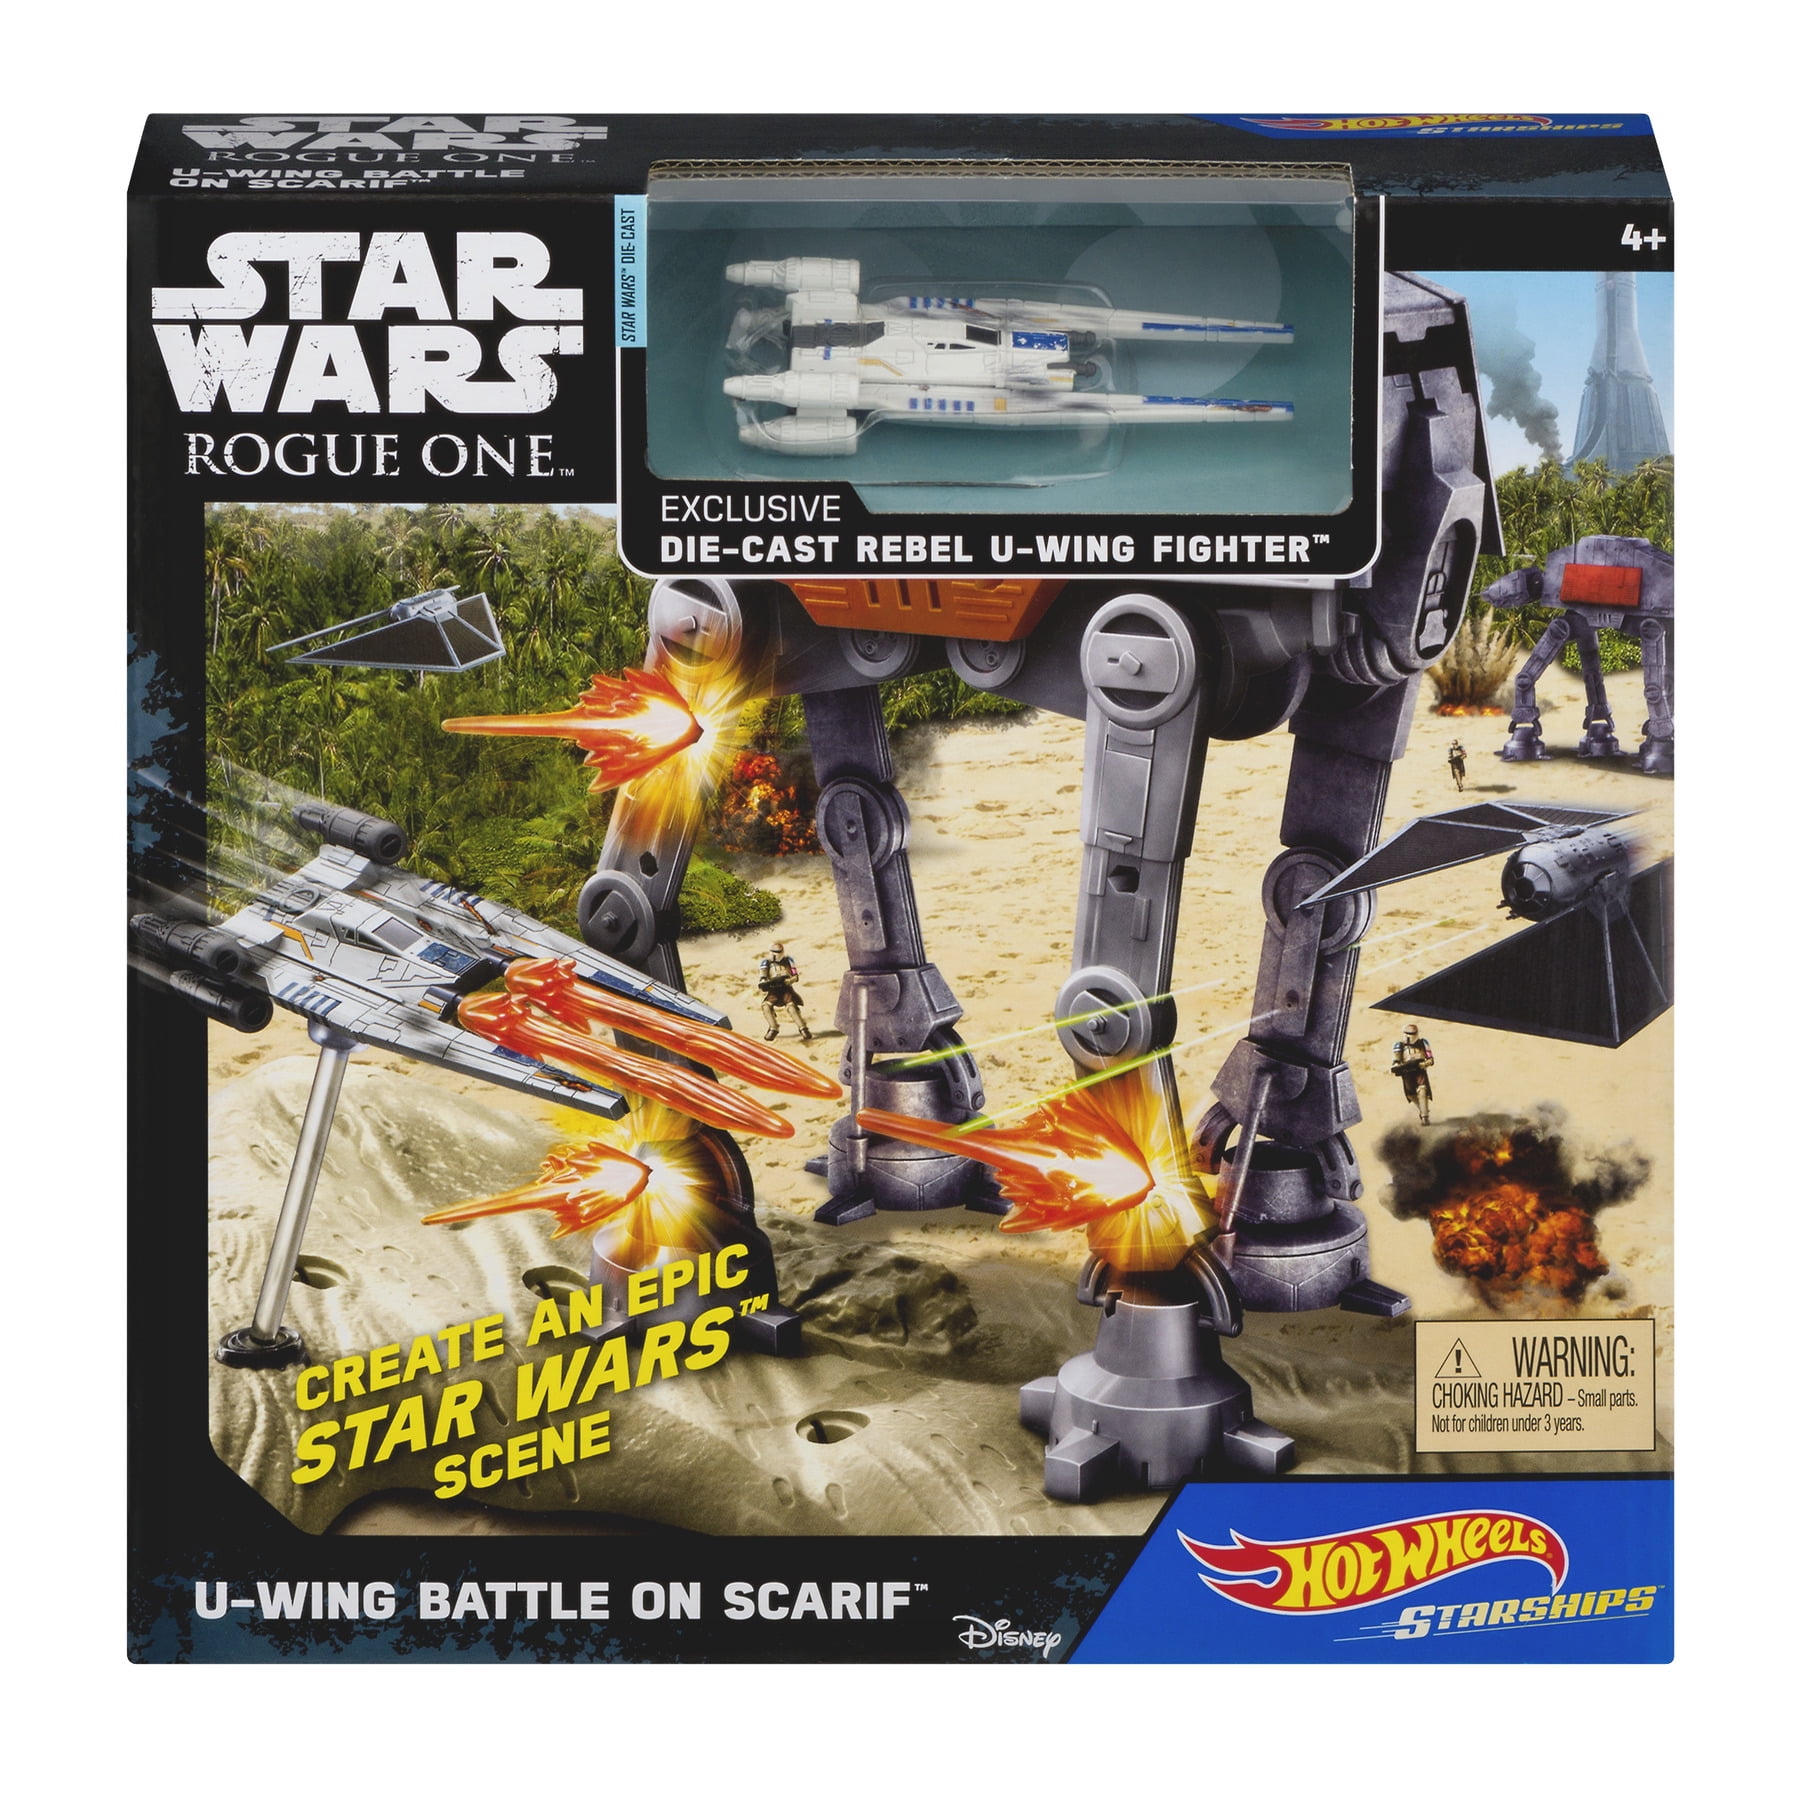 Disney Hot Wheels Star Wars Carships Rogue One Rebel U-Wing Fighter Diecast 1:64